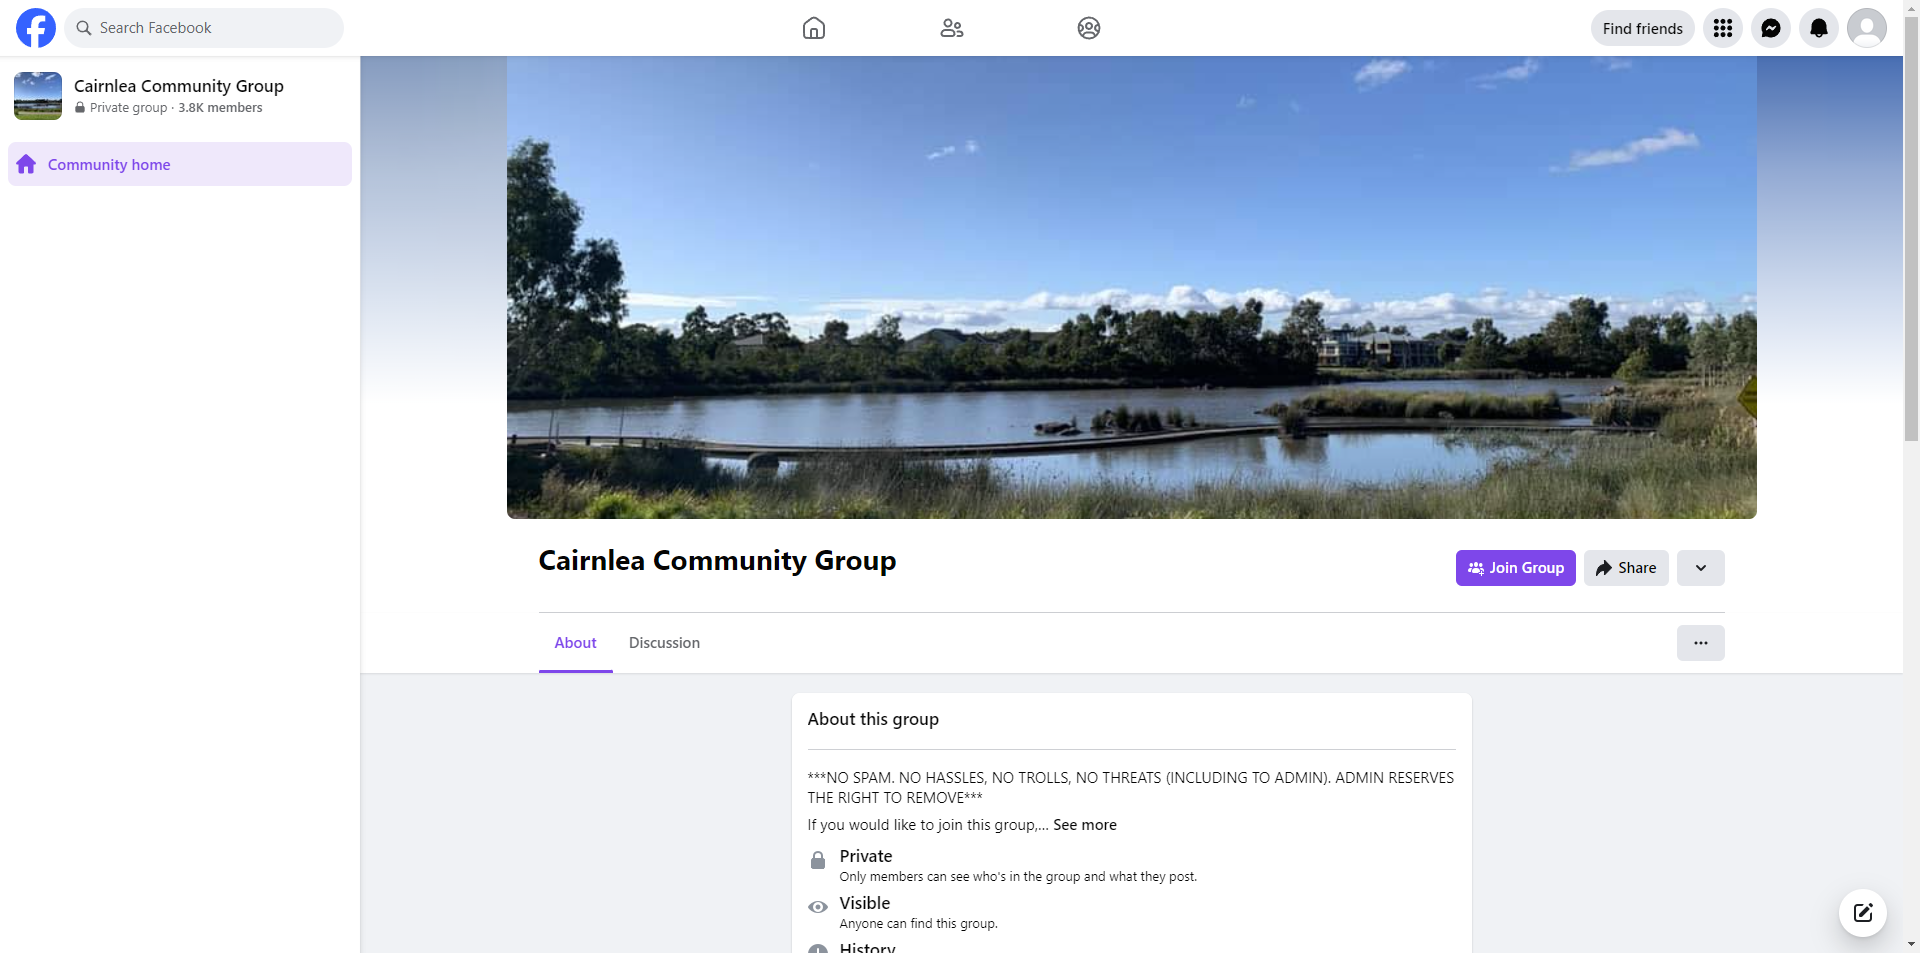 Cairnlea Community Group